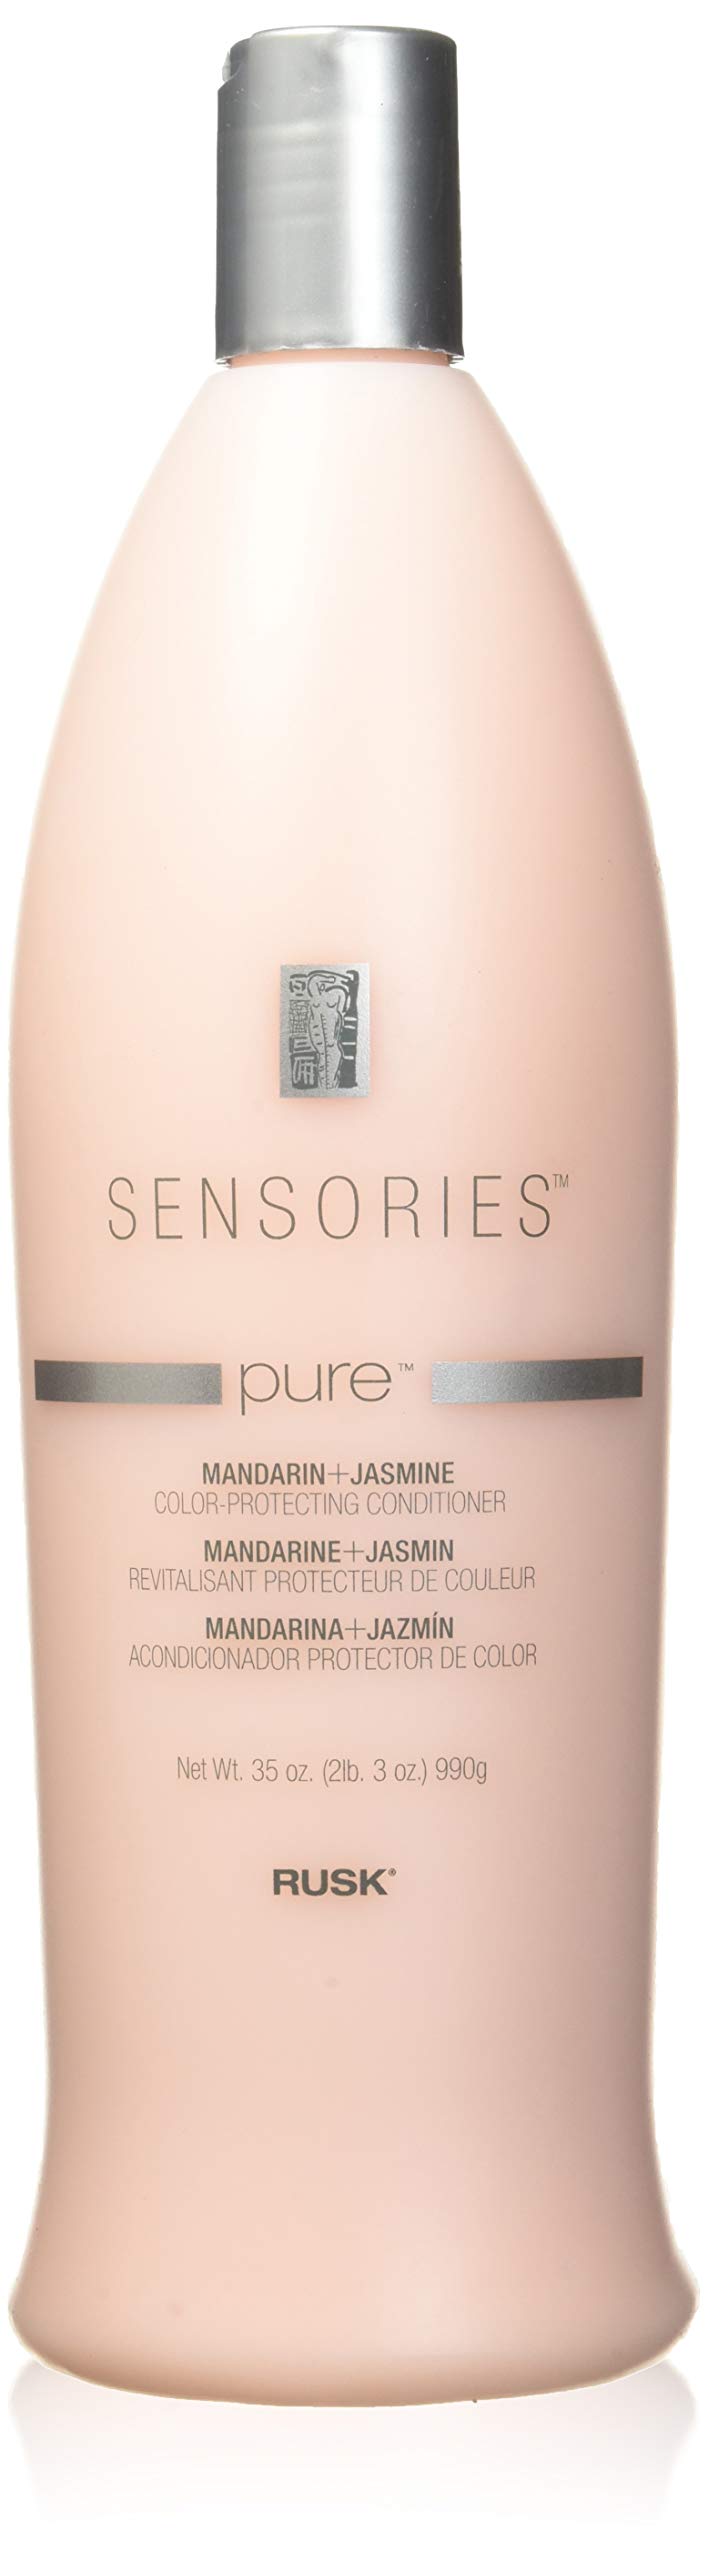 RUSK Sensories Pure Mandarin and Jasmine Vibrant Color Conditioner, 33.8 fl. oz.